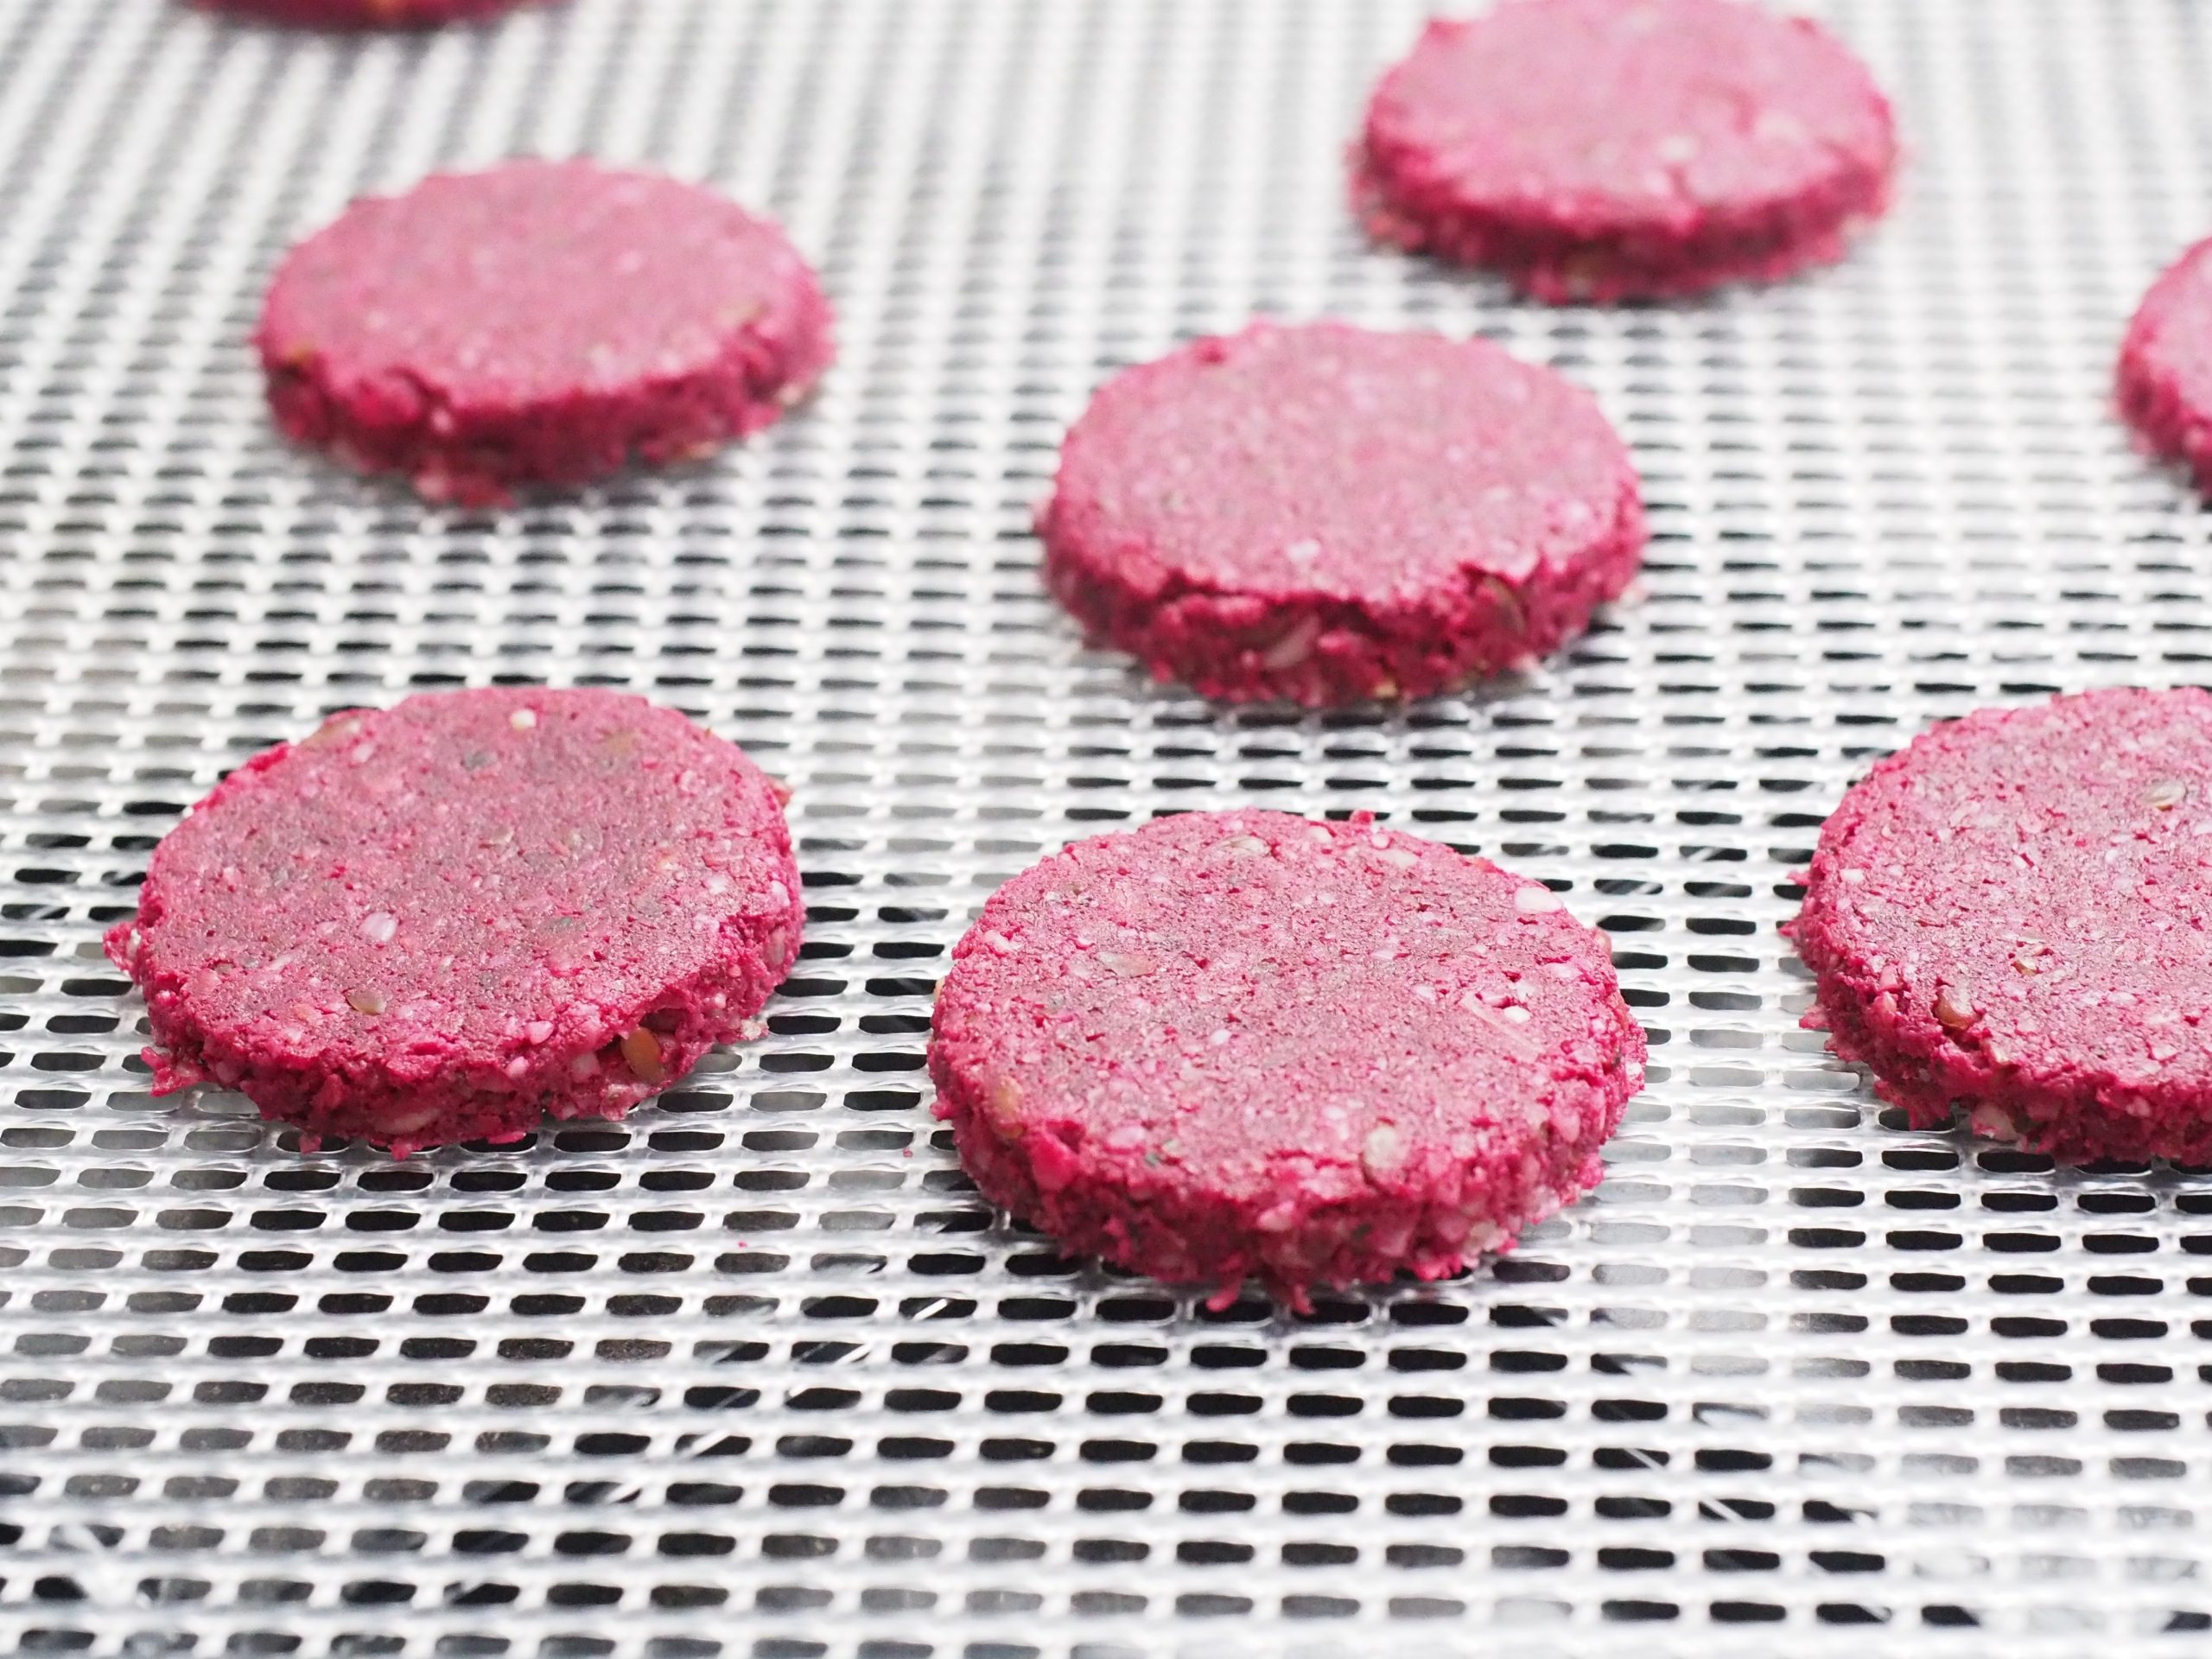 Raw vegan pink crackers